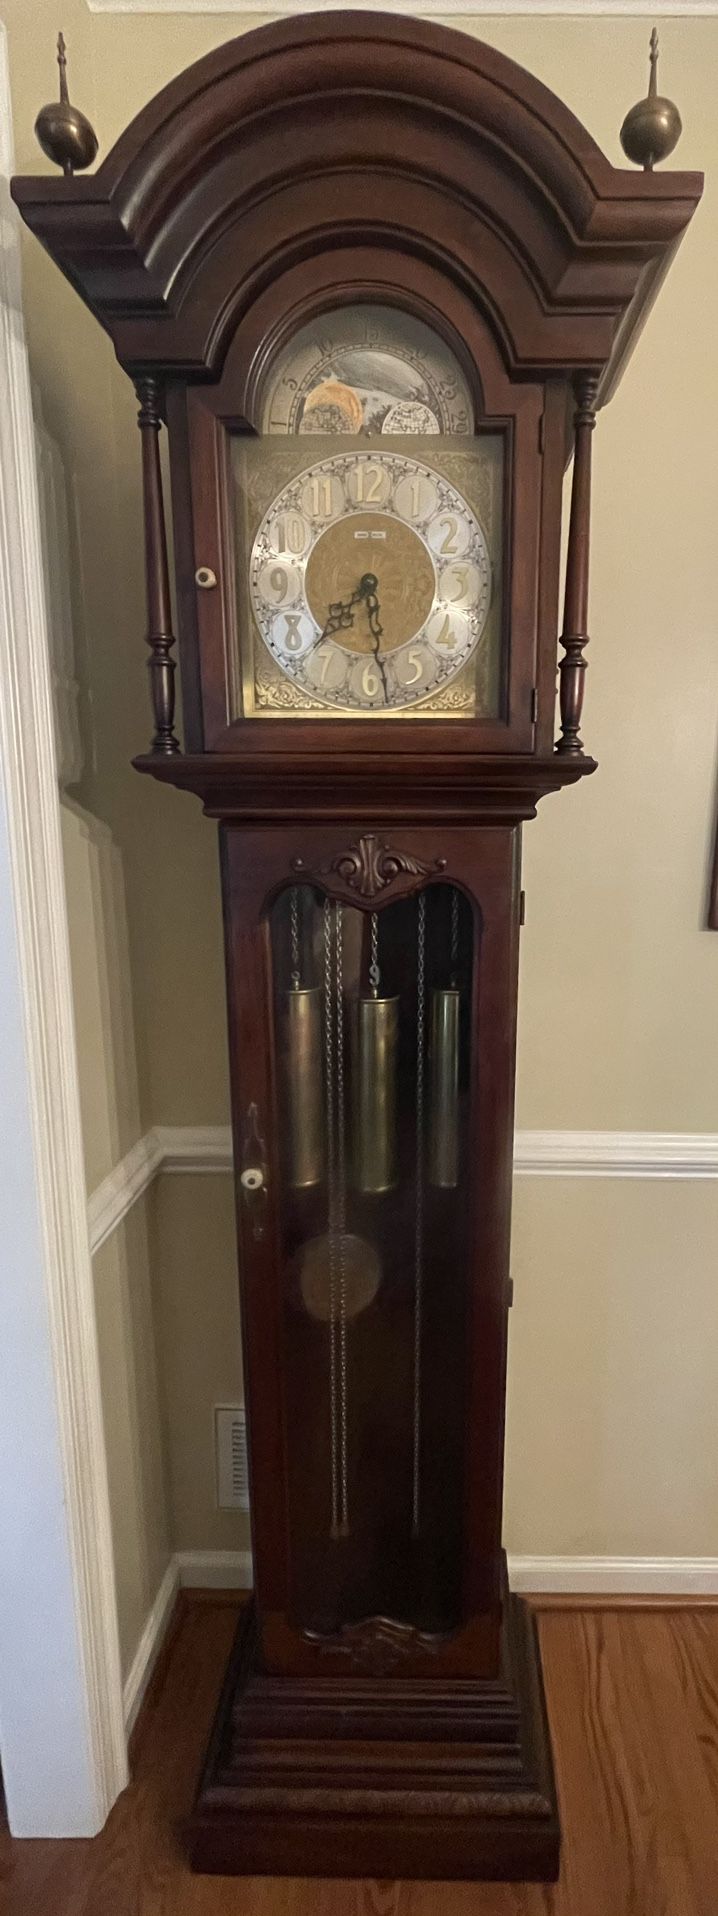 Vintage Howard Miller Triple Chime Sun Moon Face 2 Finials Grandfather Clocks